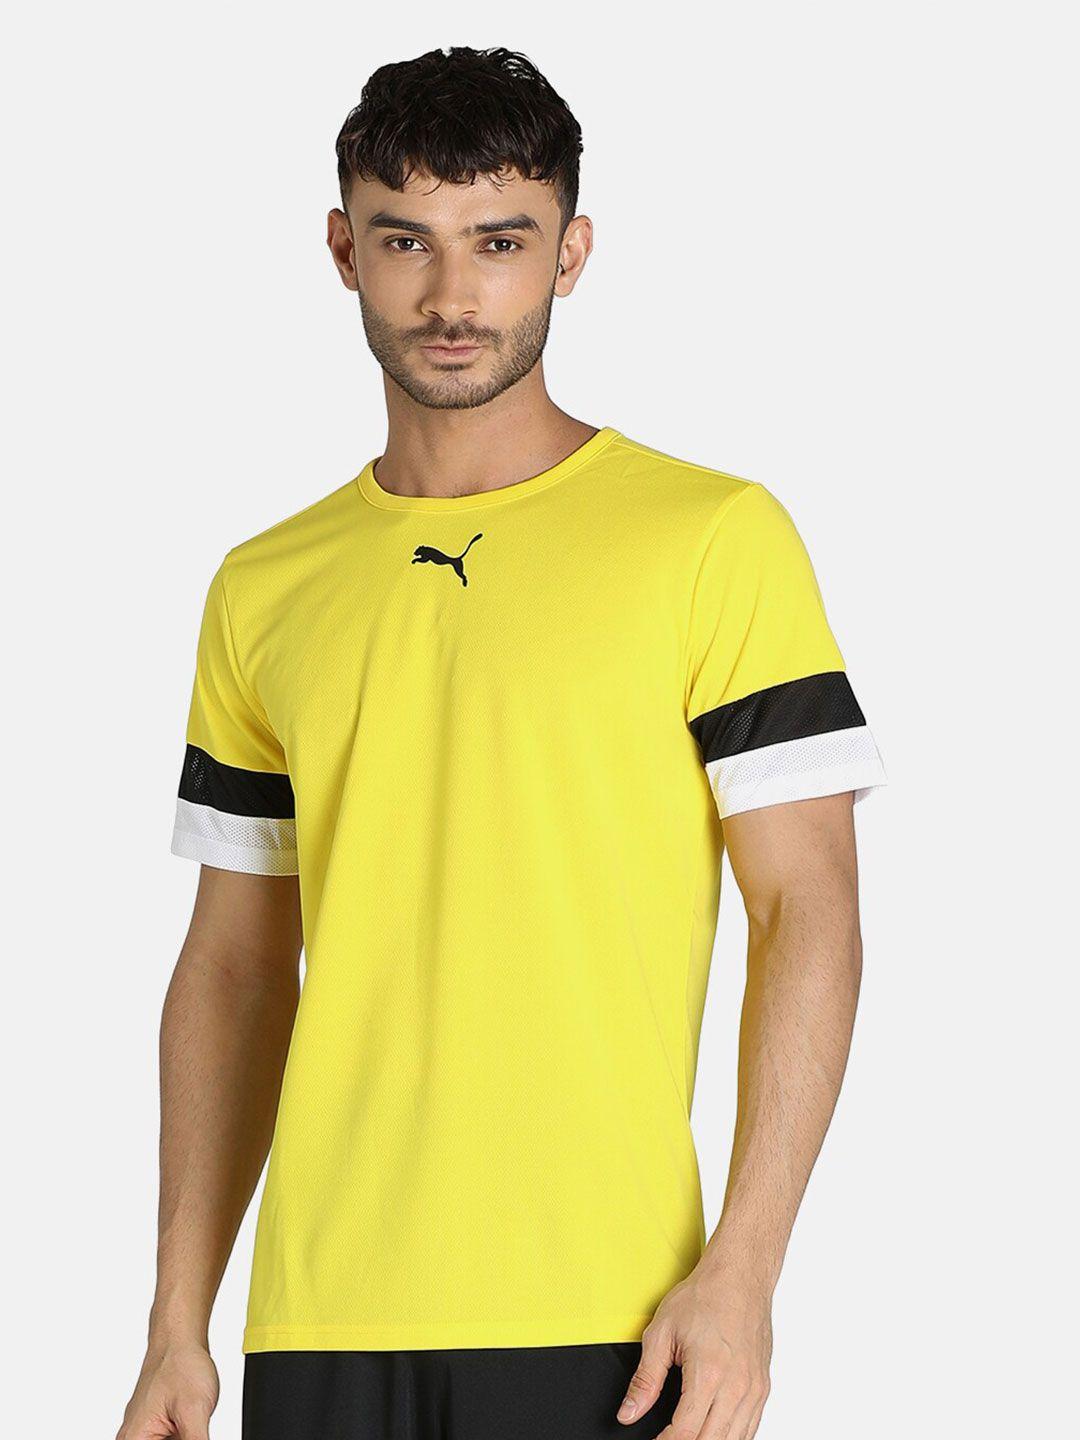 puma-men-yellow-brand-logo-teamrise-regular-fit-t-shirt